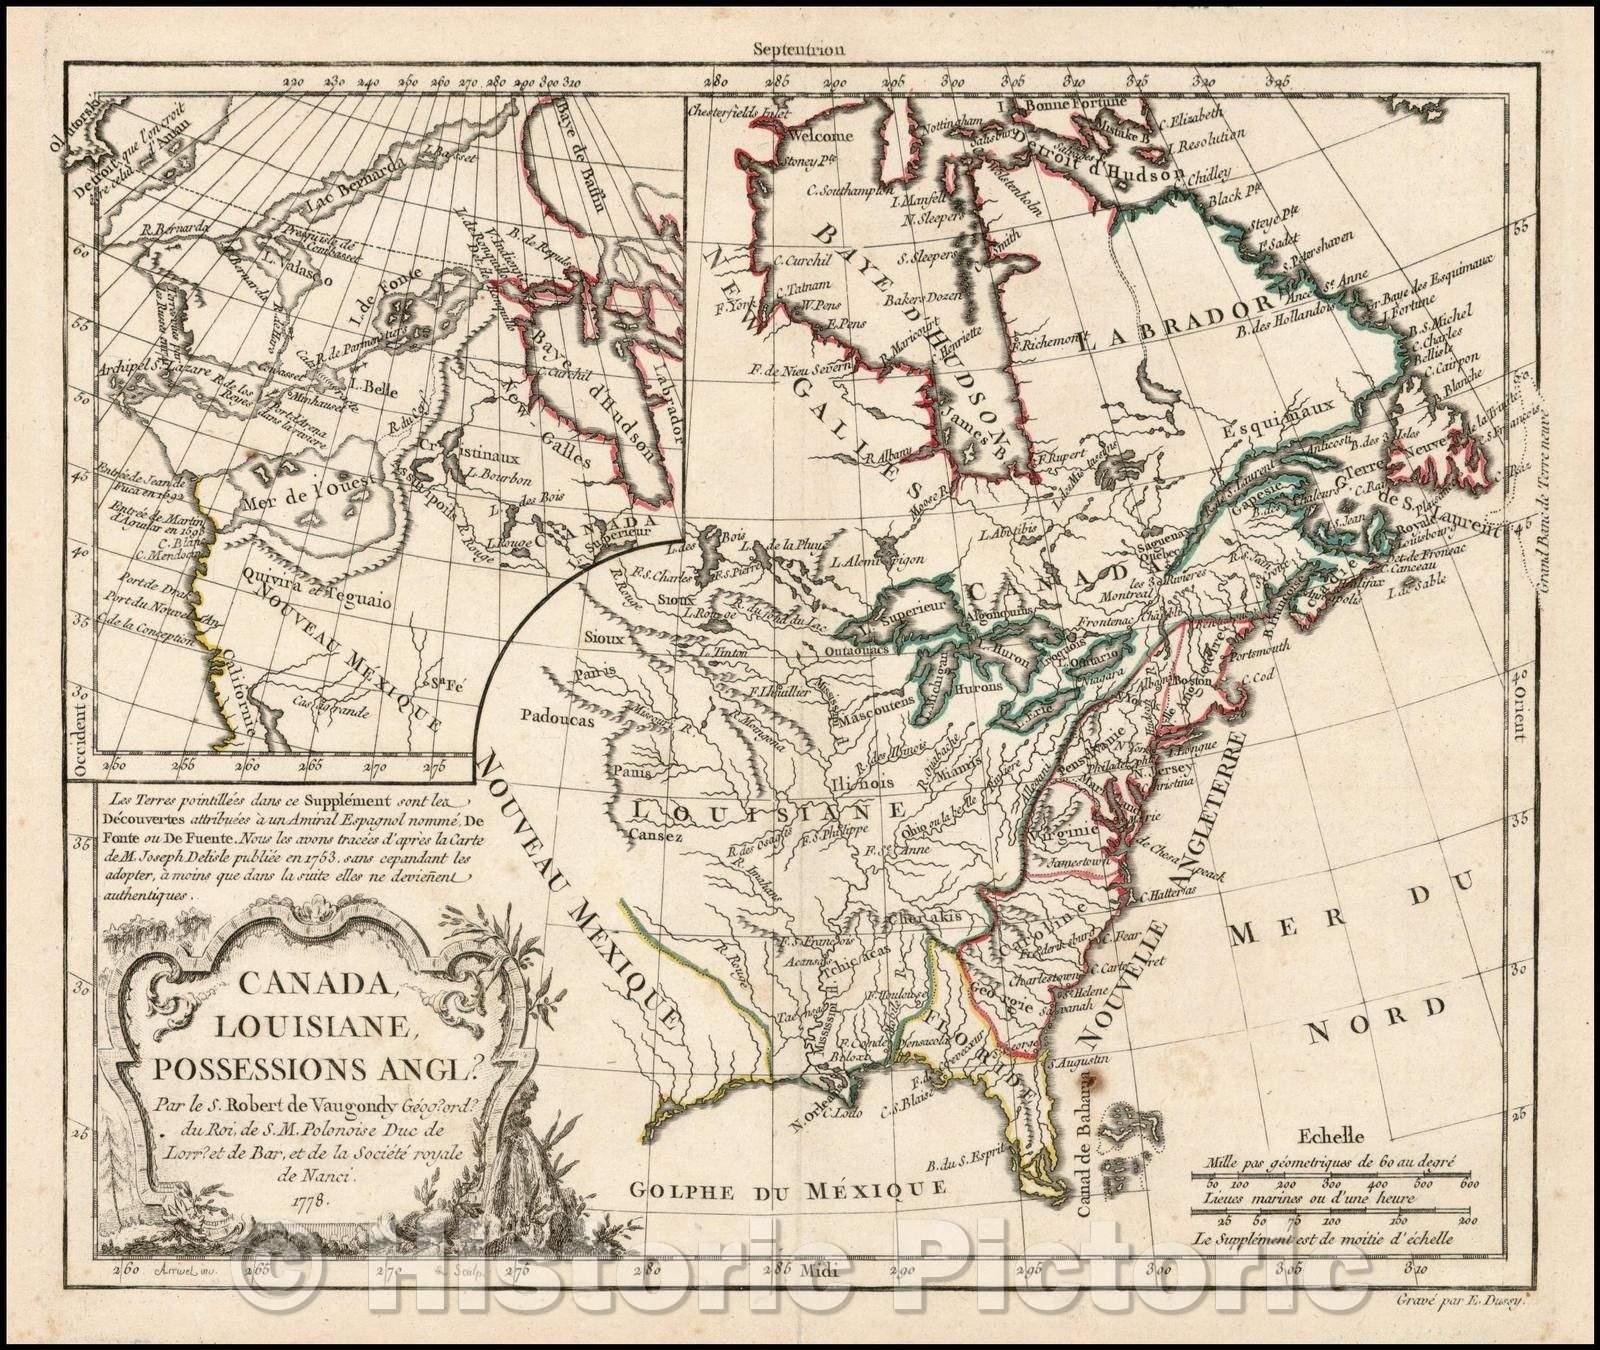 Historic Map - Canada, Louisiane, Possessions Angl? Pars Robert de Vaugondy, 1778, Charles Francois Delamarche - Vintage Wall Art